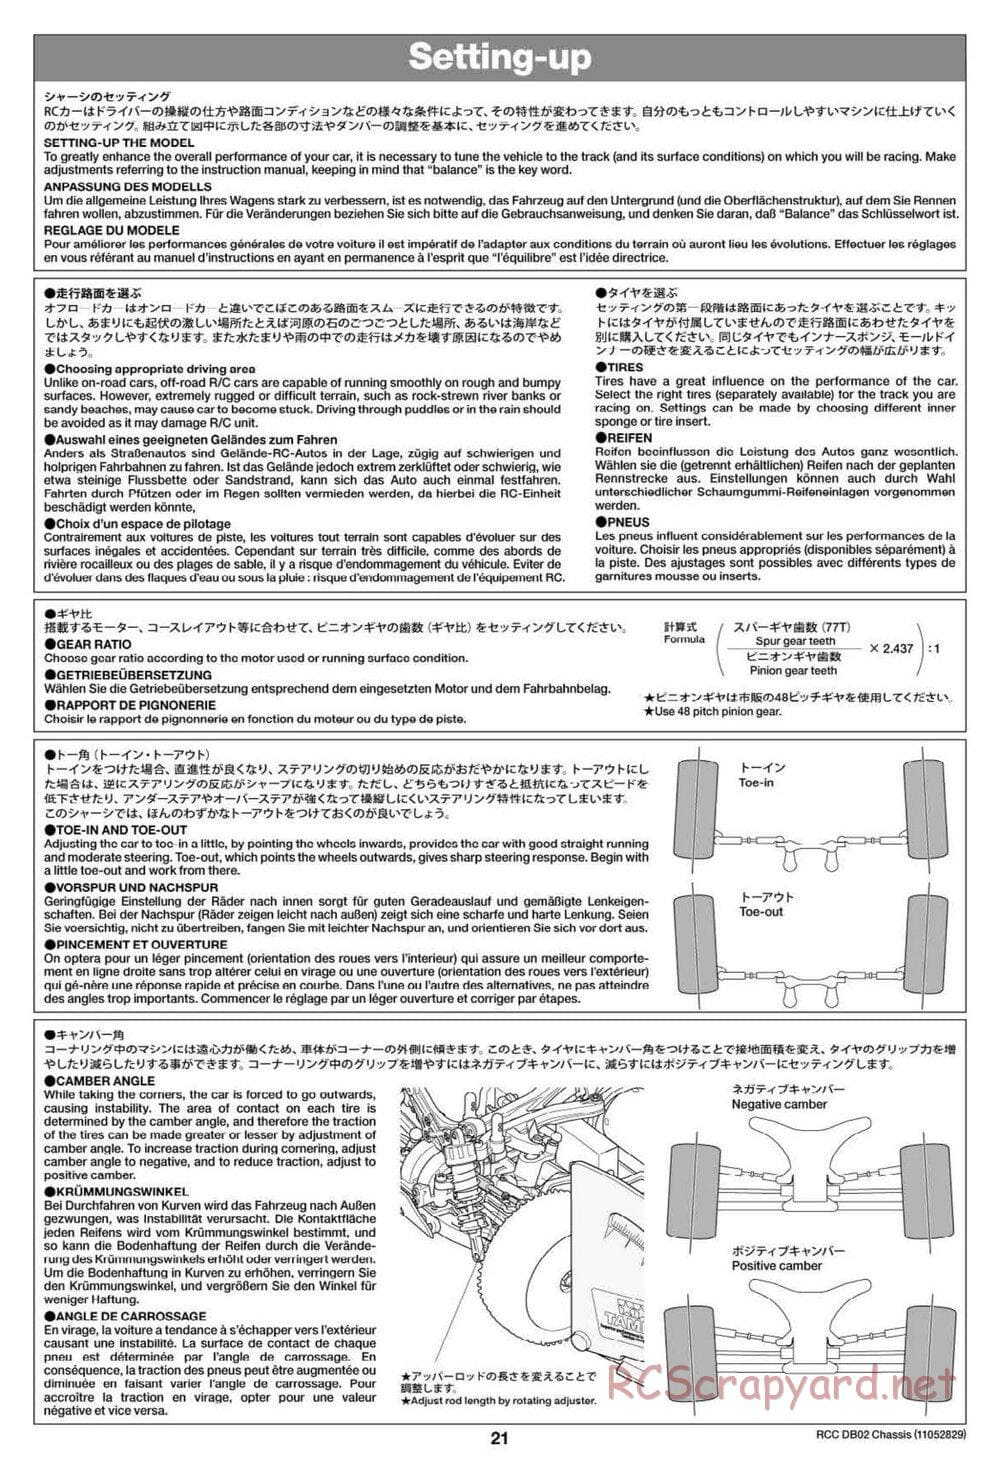 Tamiya - Leonis - DB-02 Chassis - Manual - Page 21